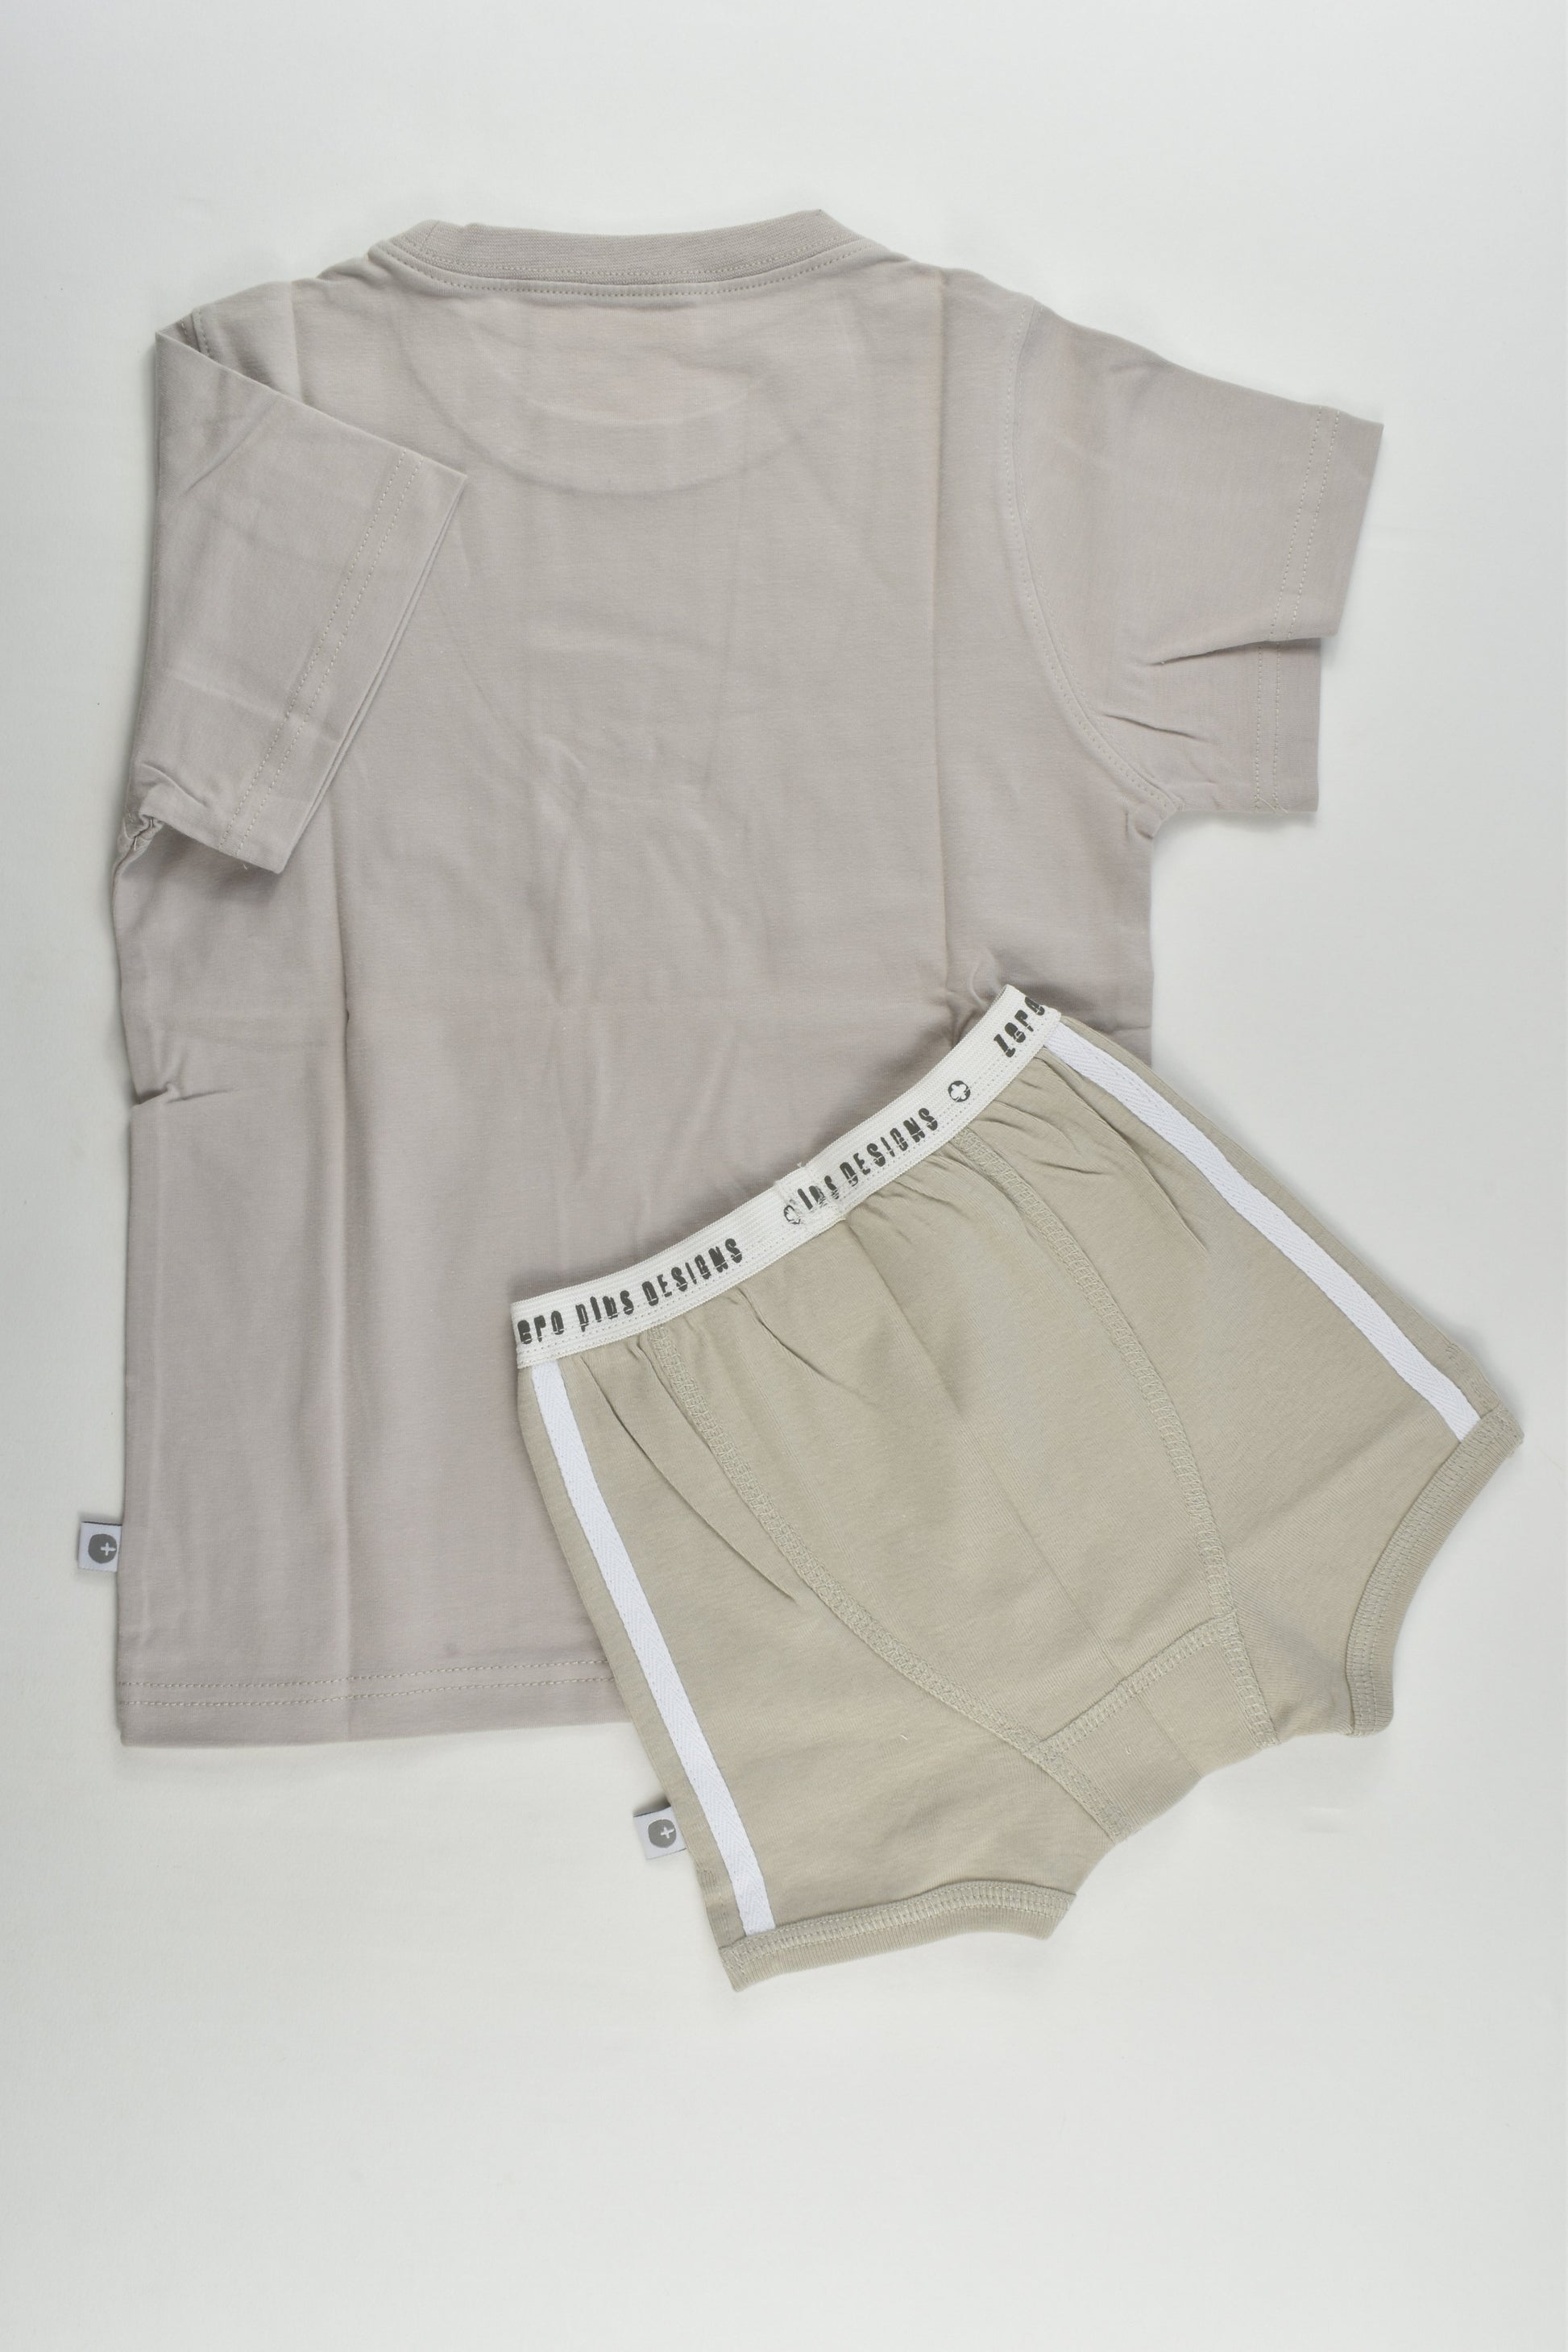 NEW Zero Designs Size 2/3 Short Pyjamas